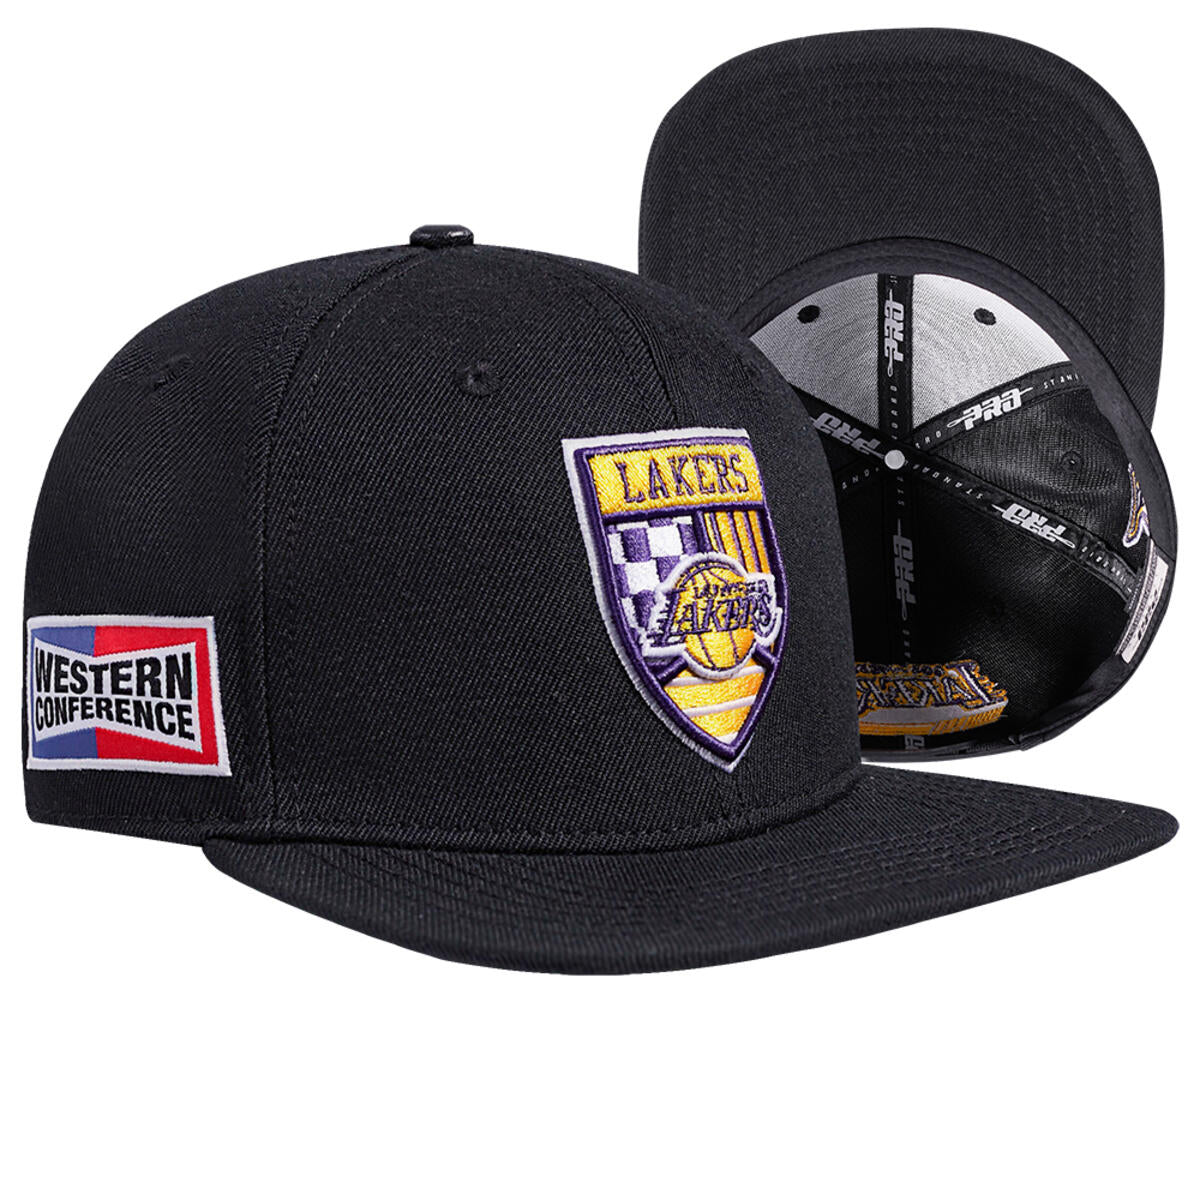 Los Angeles Lakers Fast Lane Snapback Hat - Black